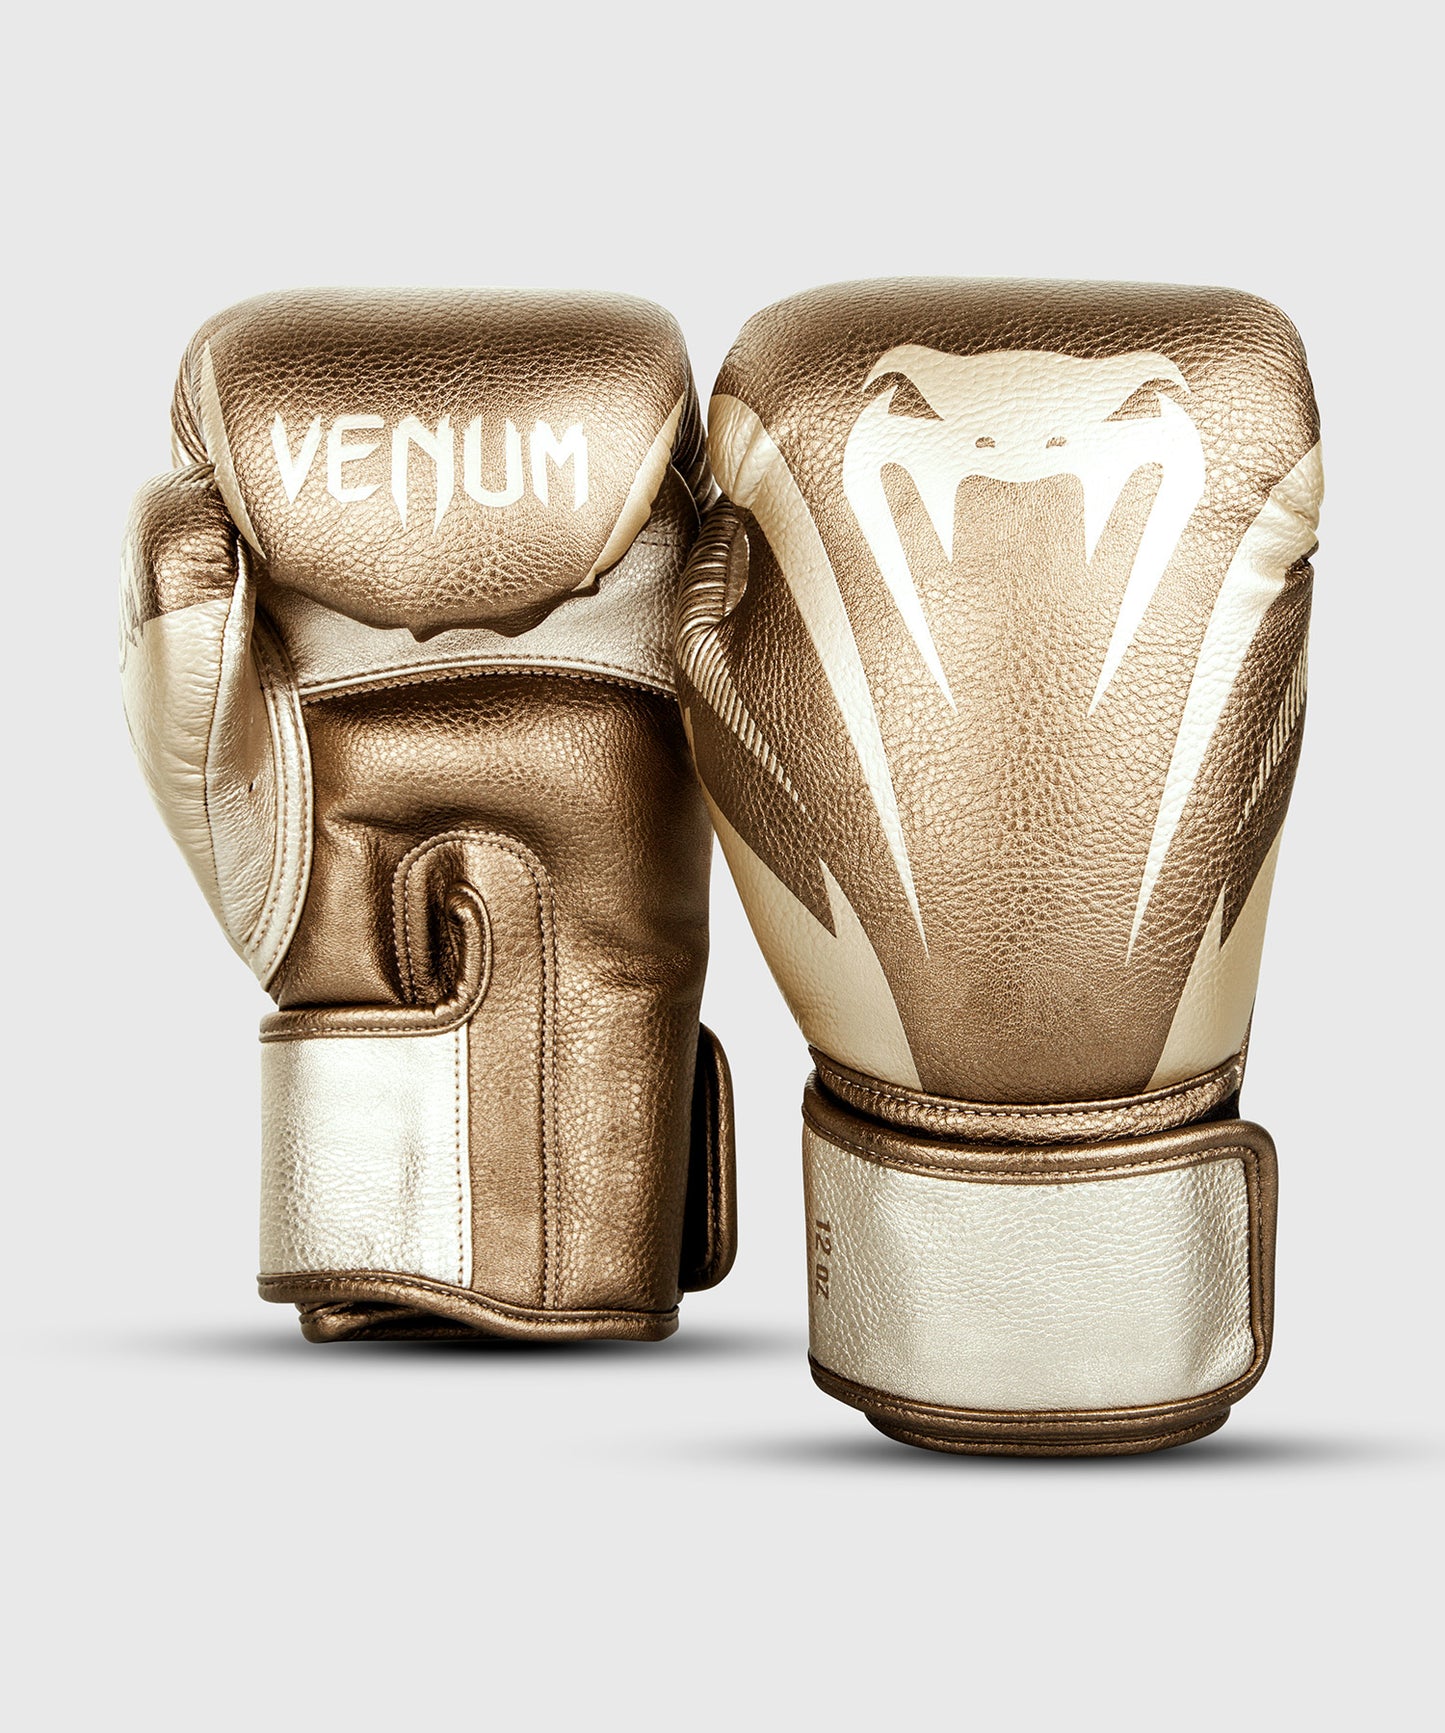 Venum Impact Boxing Gloves - Gold/Gold